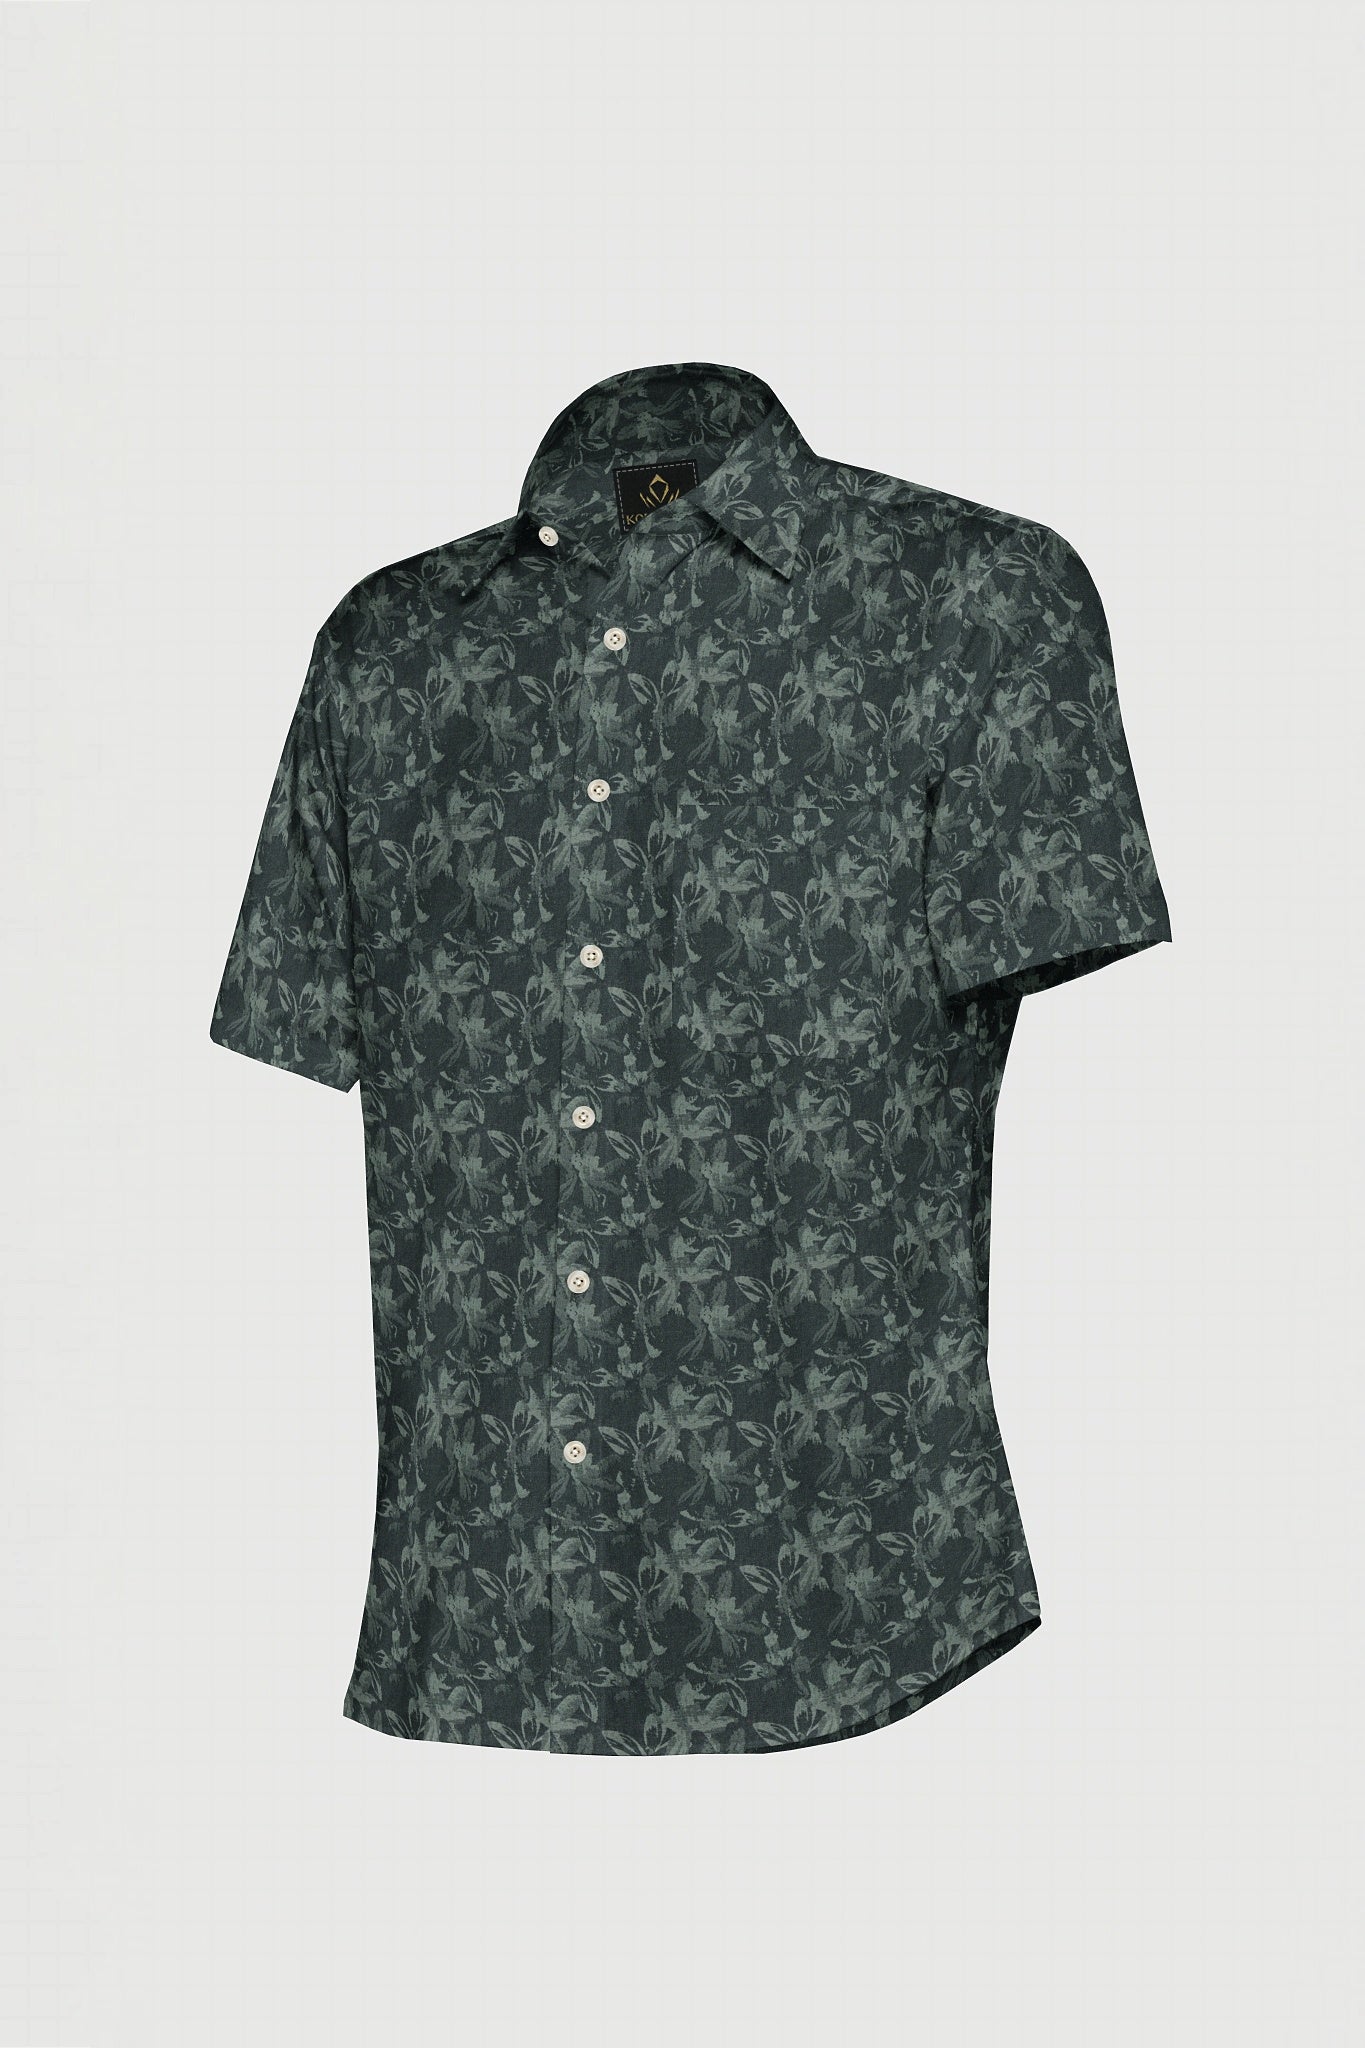 Black with Aganthus Green Crack Willow Leaf Jacquard Premium Cotton Shirt